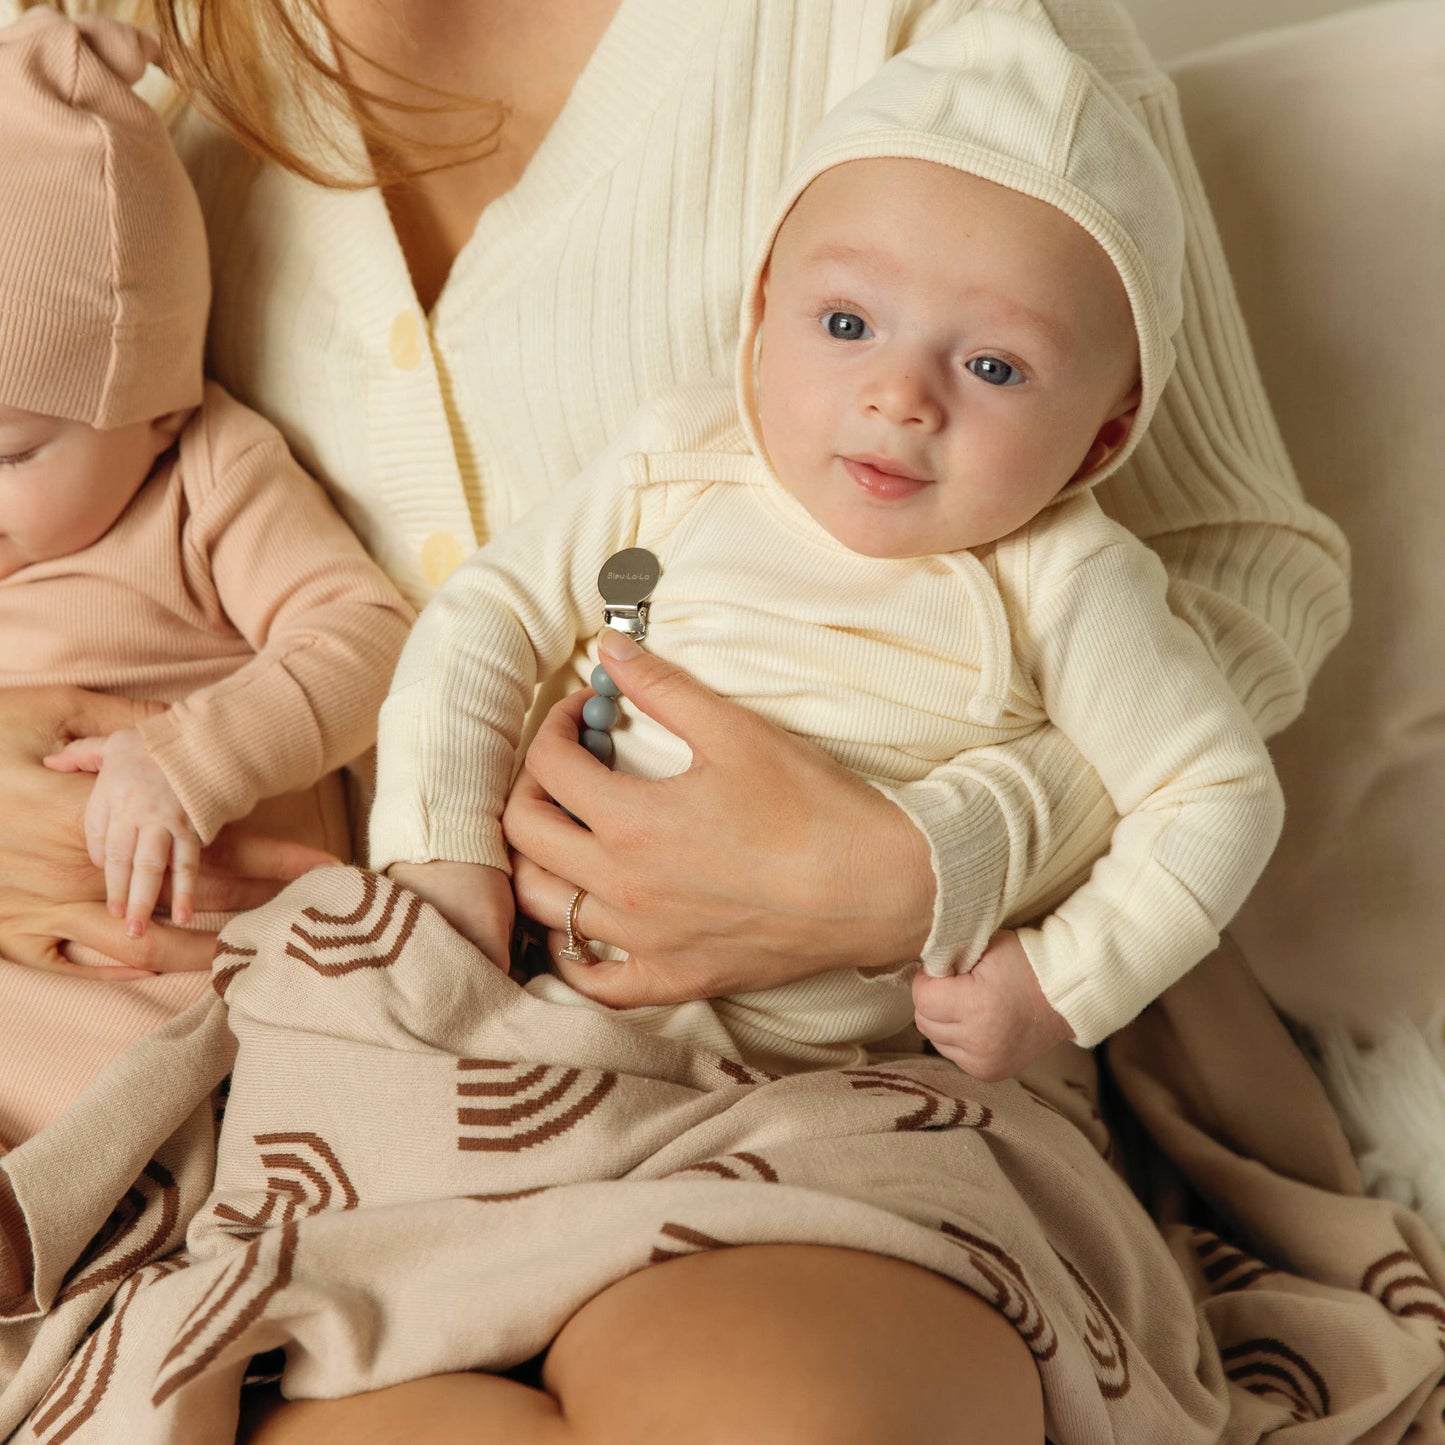 Bleu La La - 100% Luxury Cotton Swaddle Receiving Baby Blanket - Rainbow: Brown